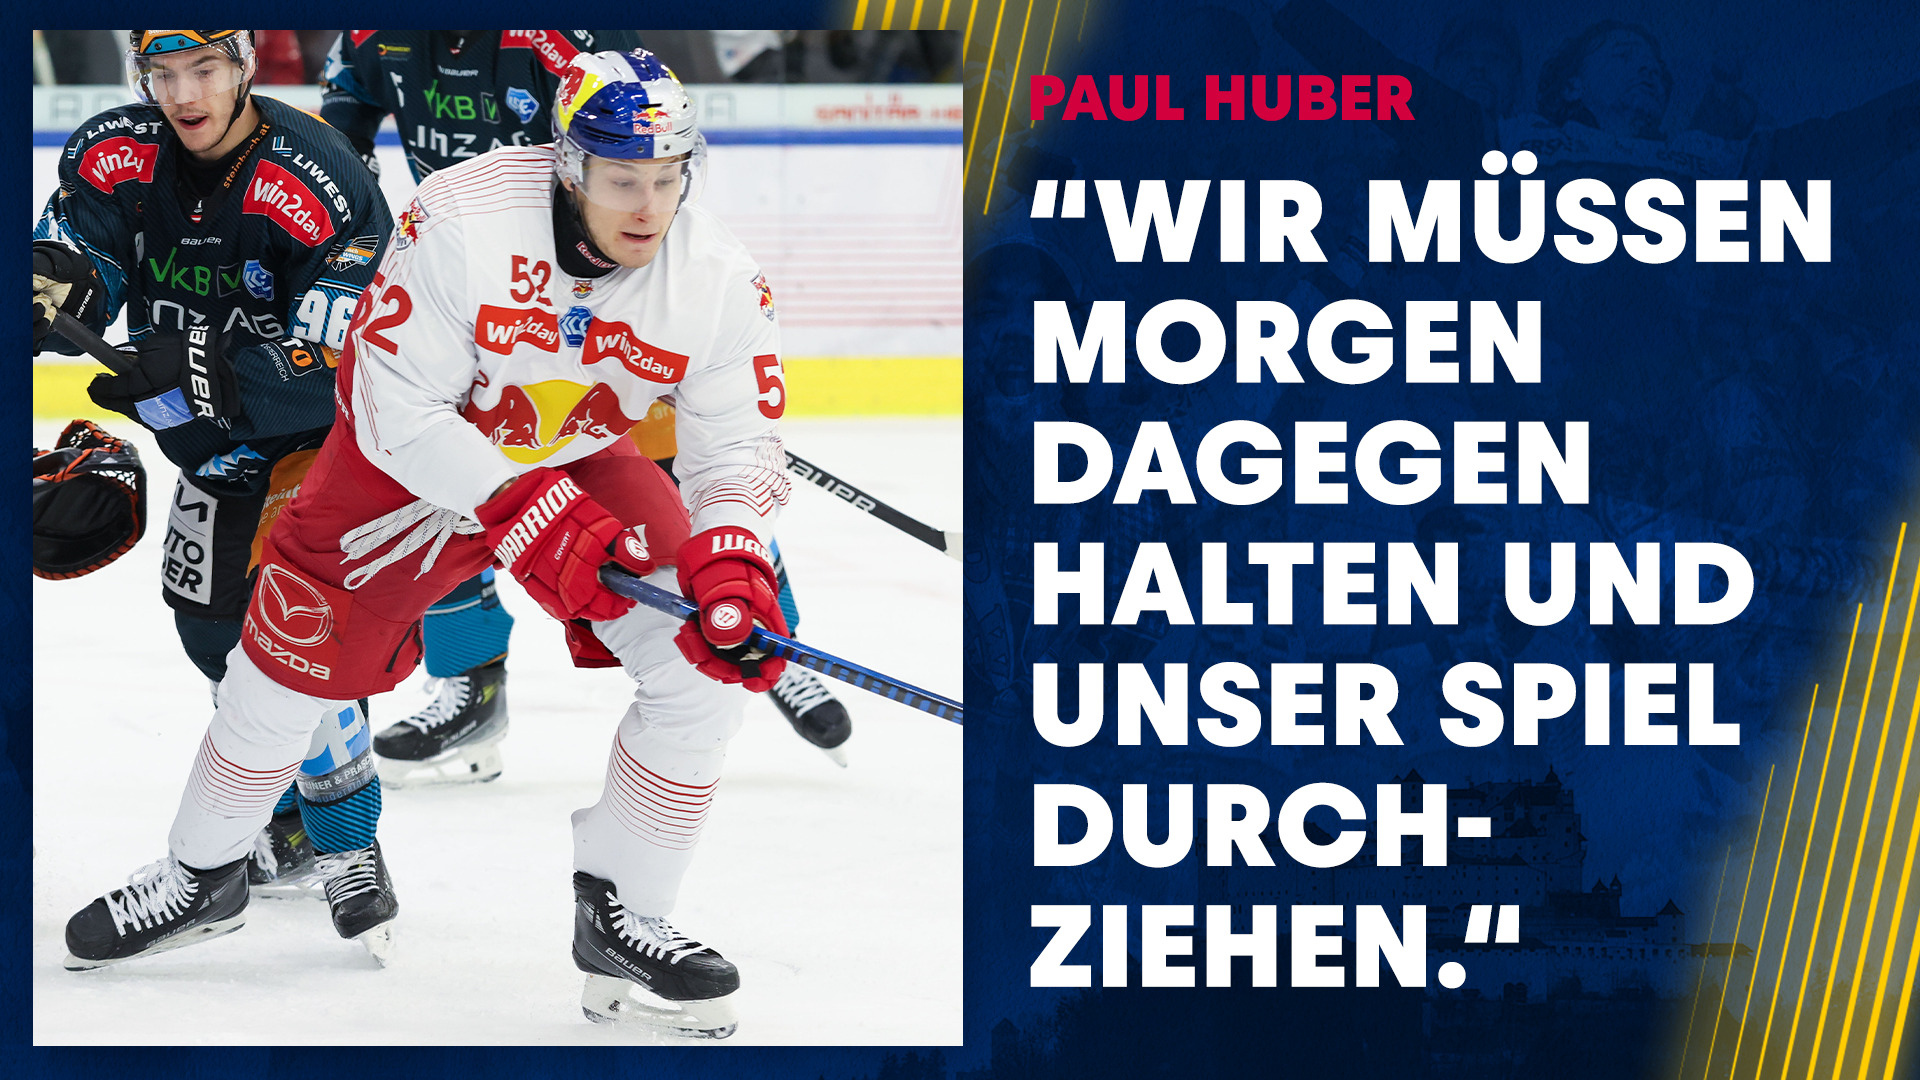 Statement: Paul Huber